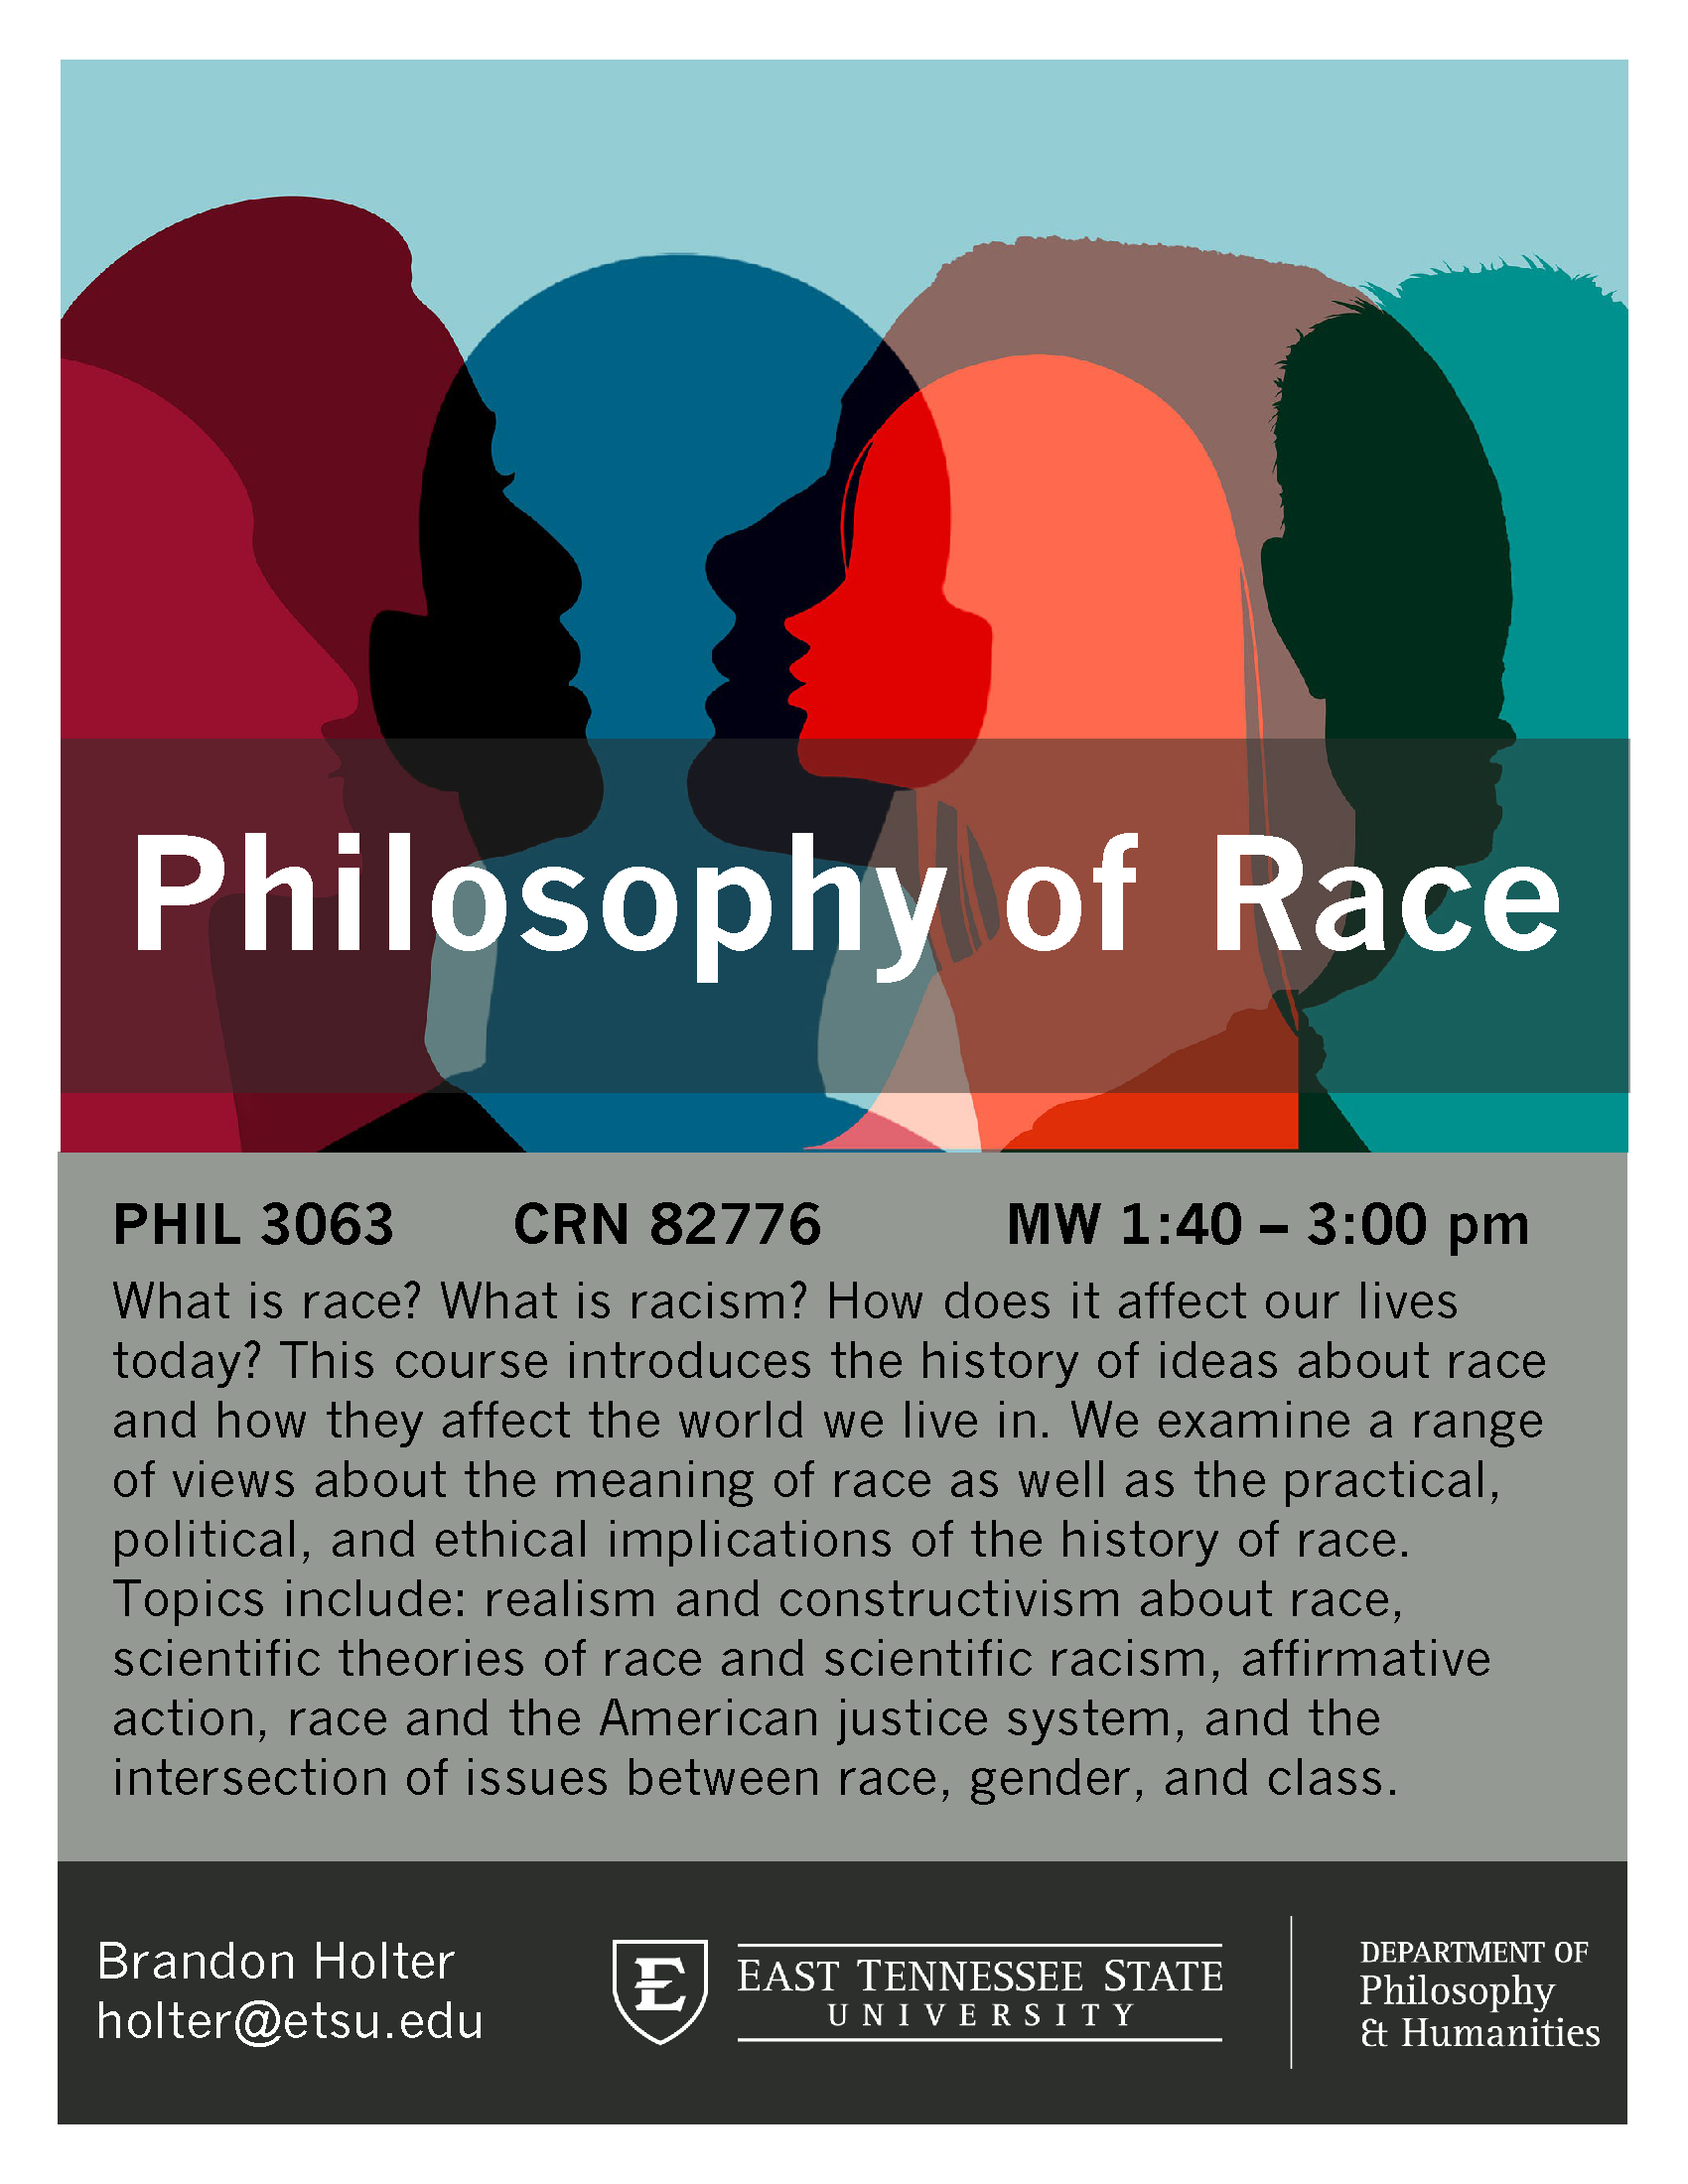 Philosophy of Race flyer